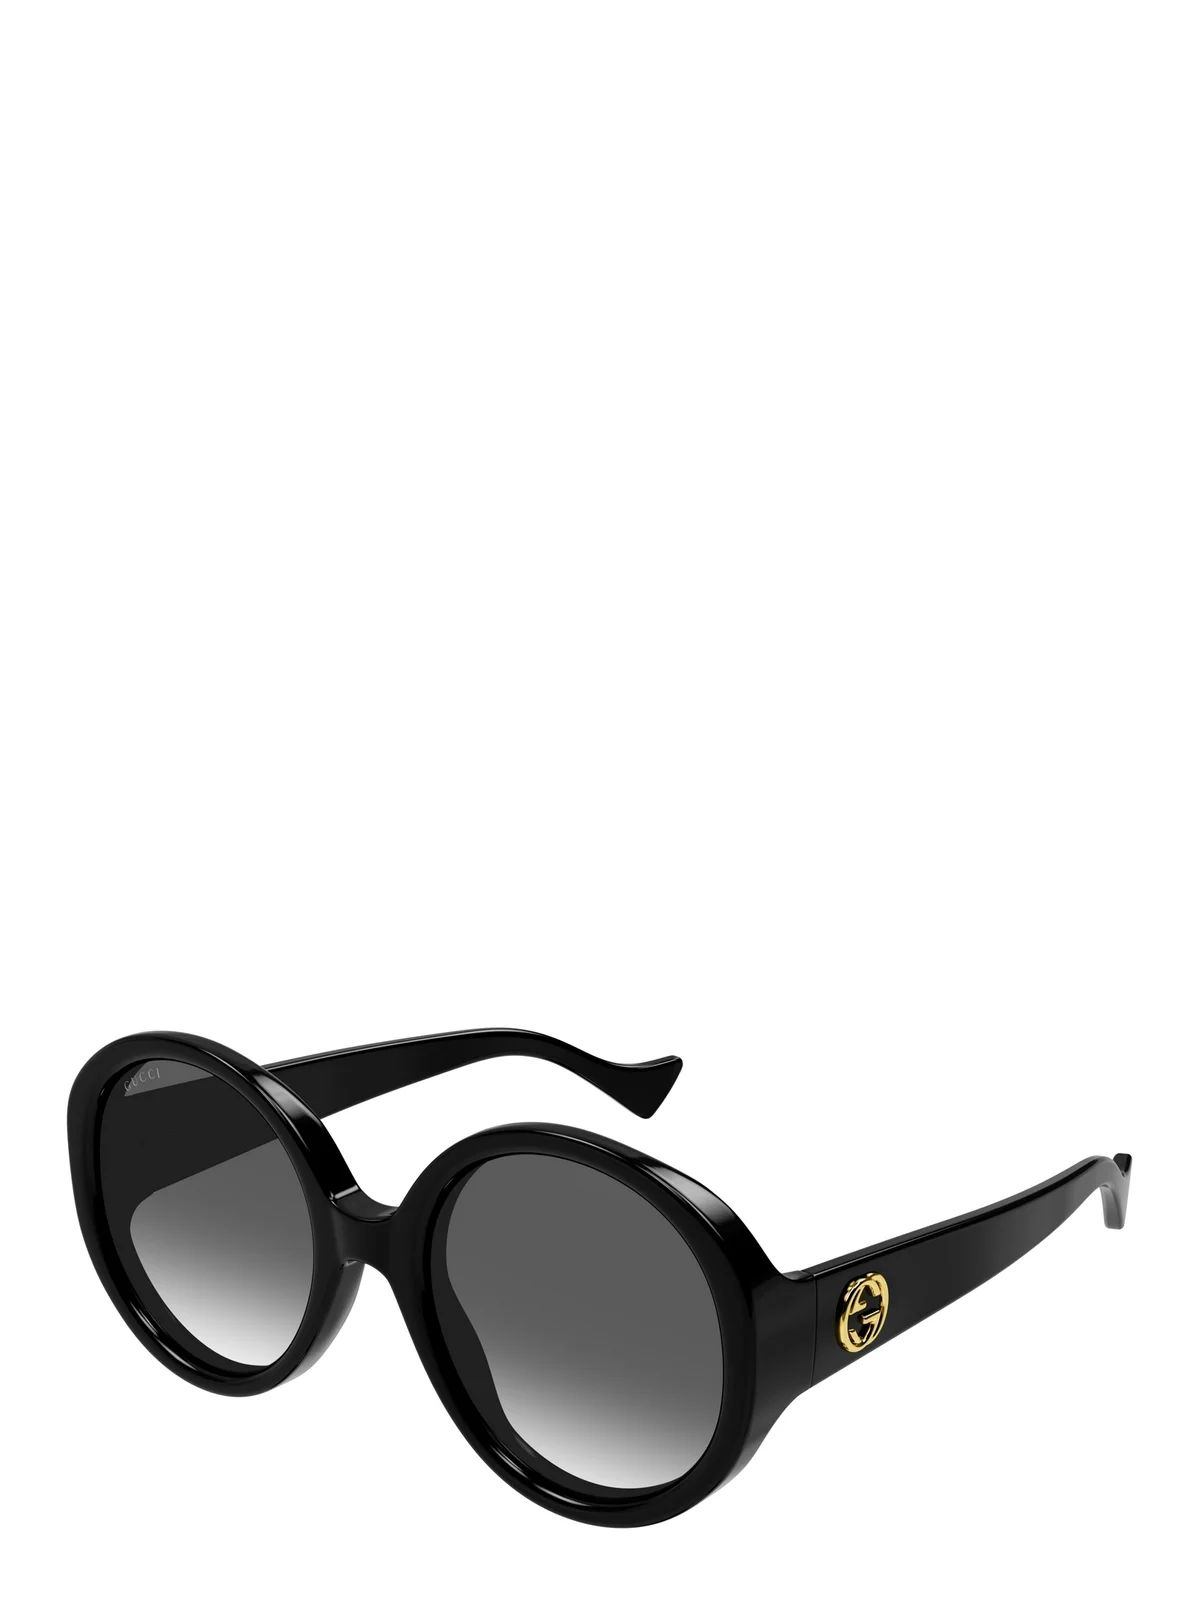 Gucci Eyewear Round Frame Sunglasses | Cettire Global